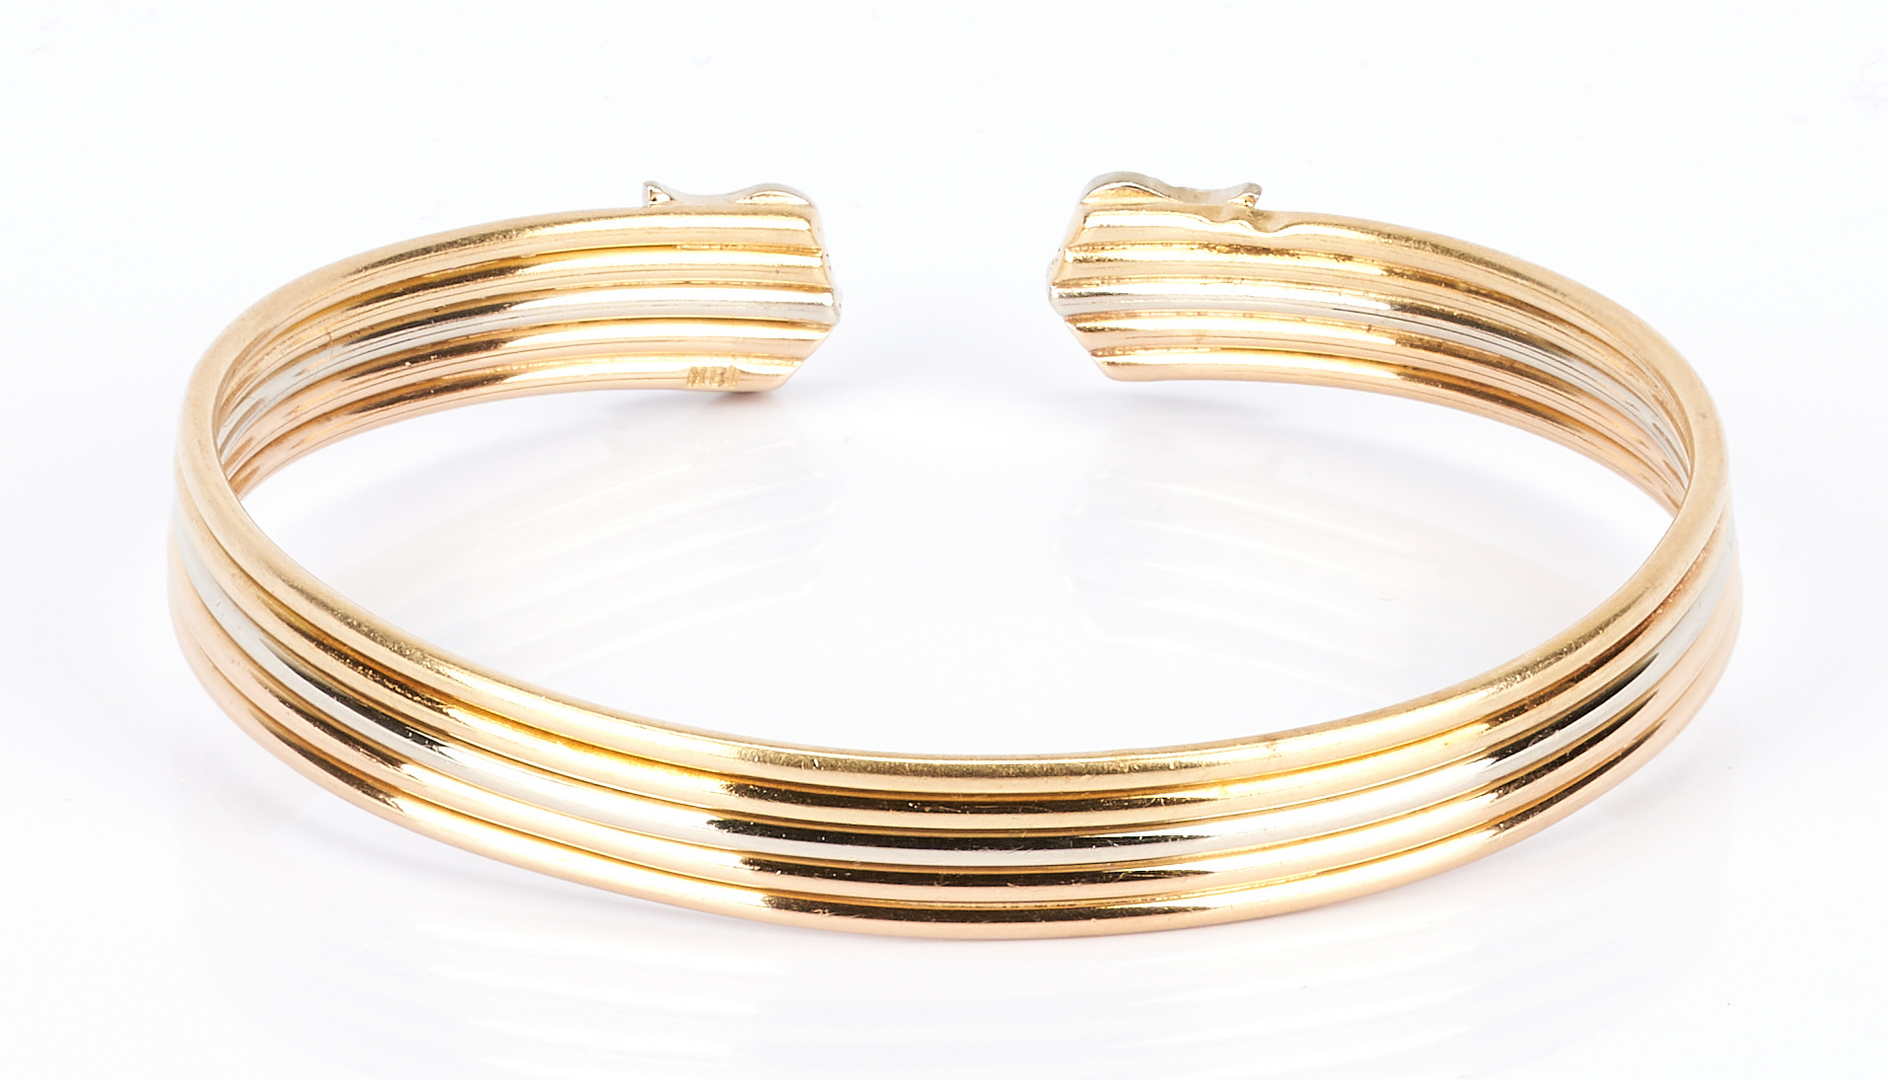 Lot 736: Ladies 18K Gold and Diamond Bangle Bracelet